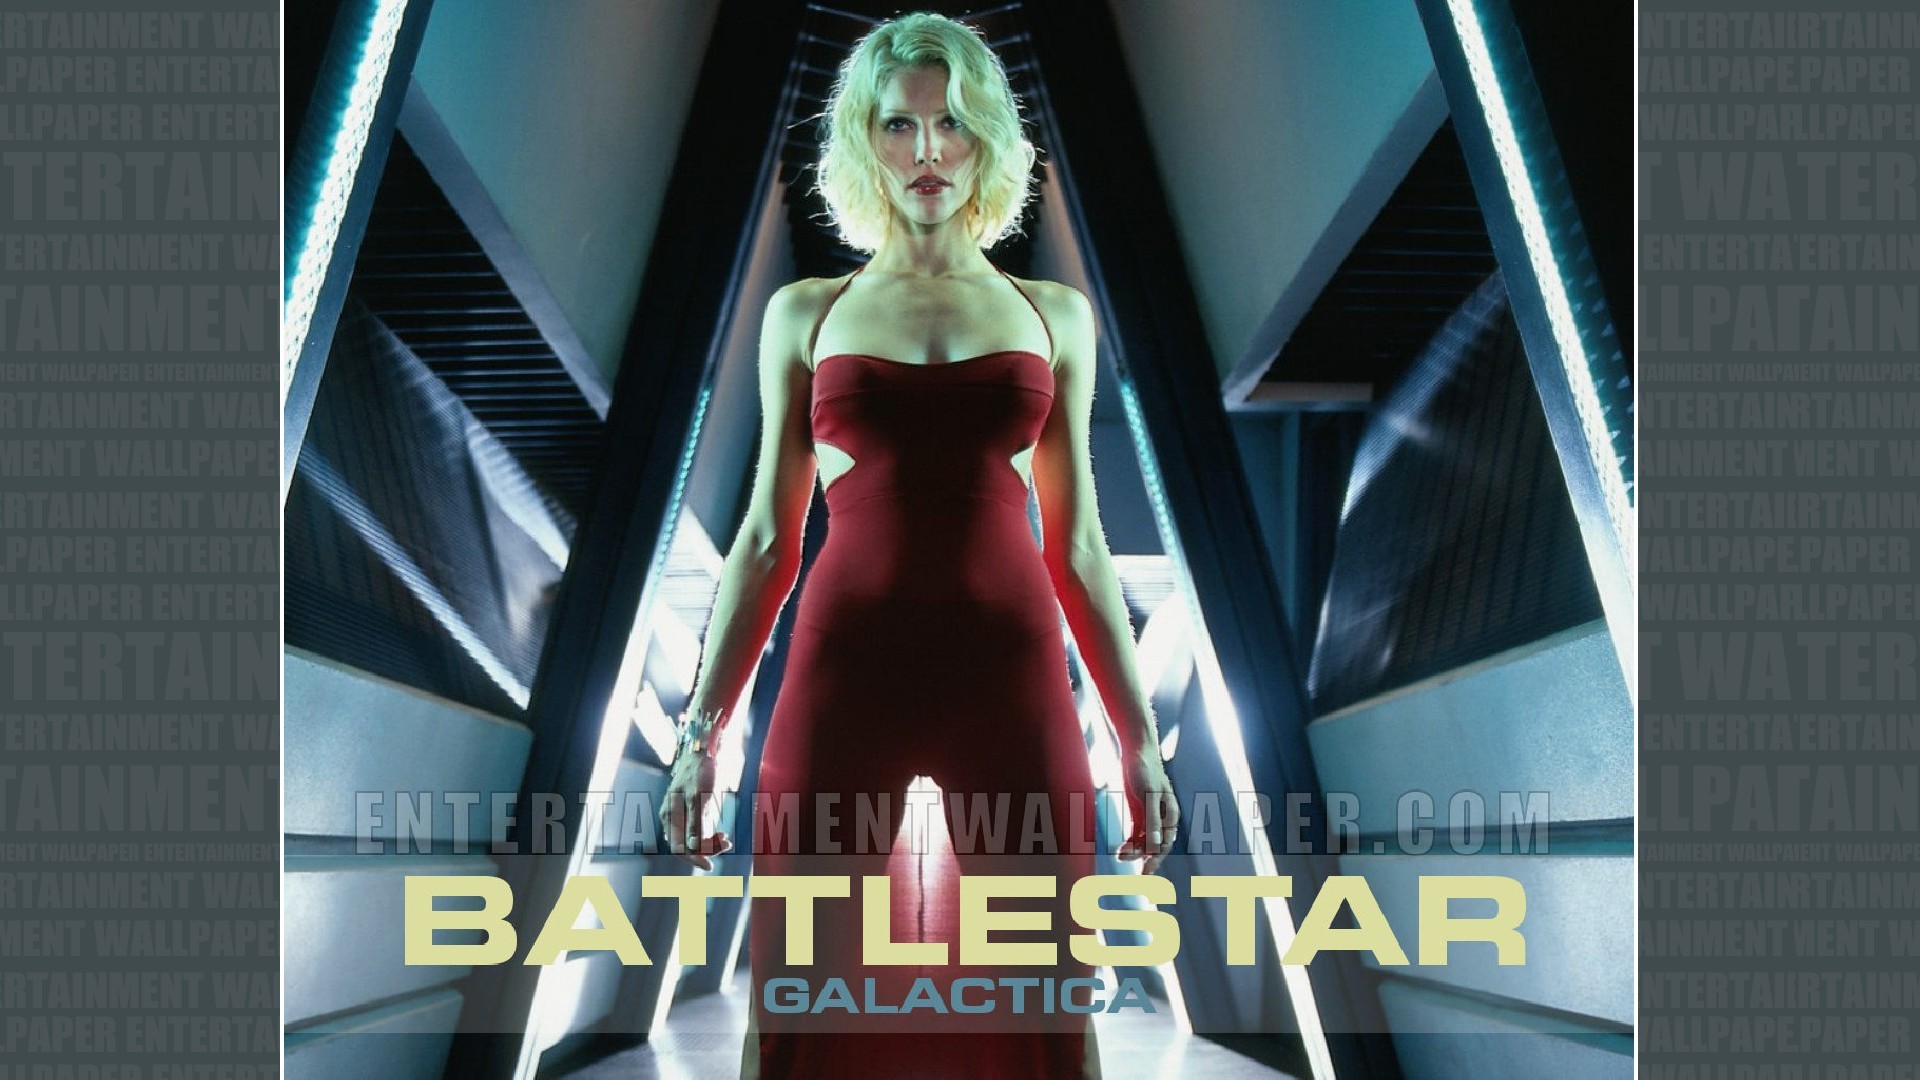 Battlestar Galactica Wallpaper – Original size, download now.